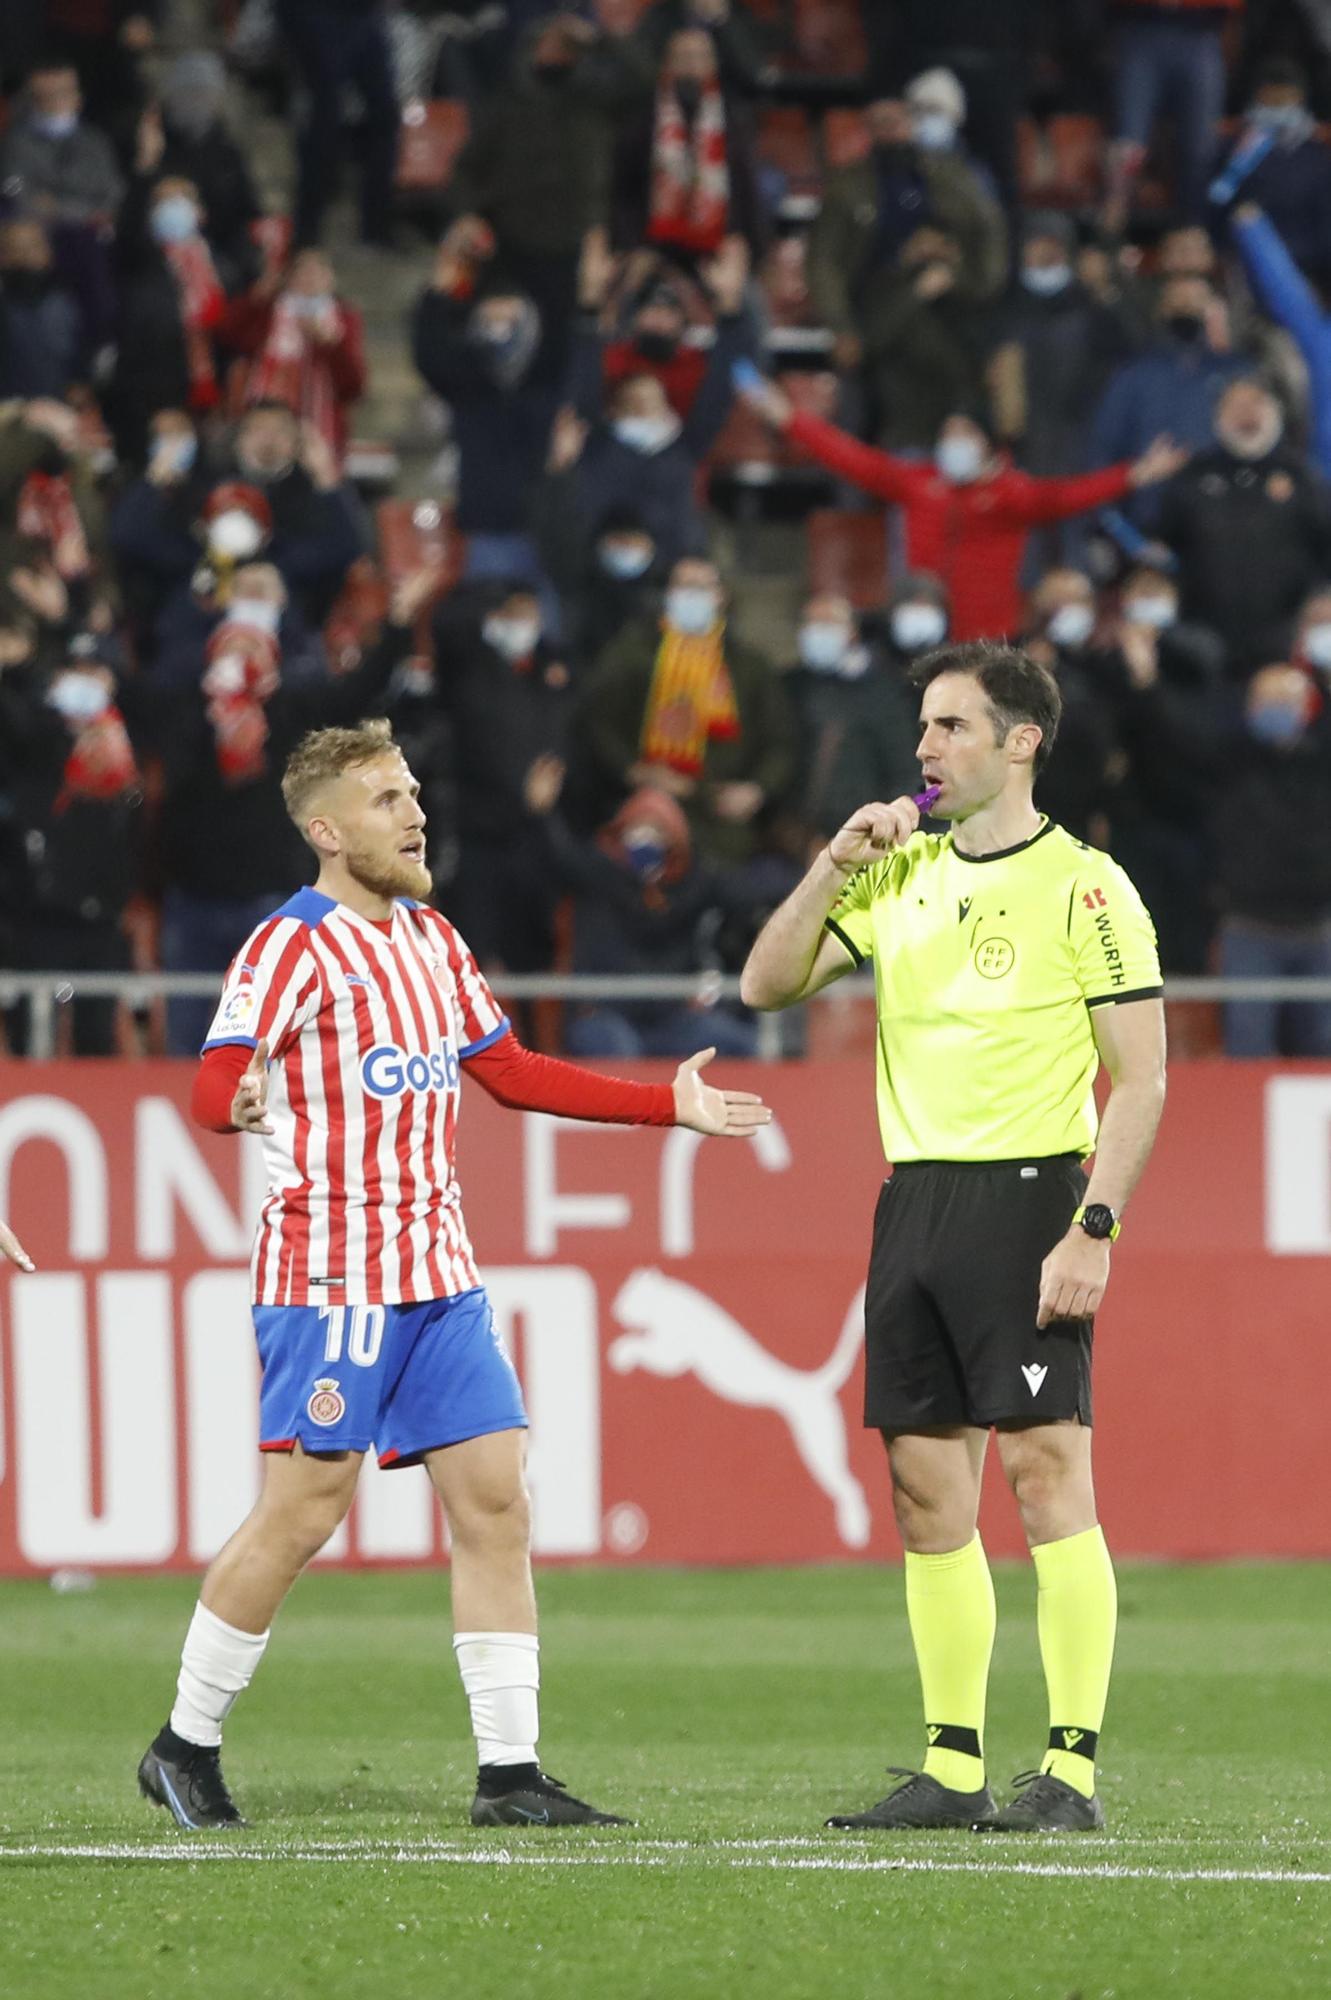 Girona 2-1 Oviedo: L’alegria de guanyar de nou